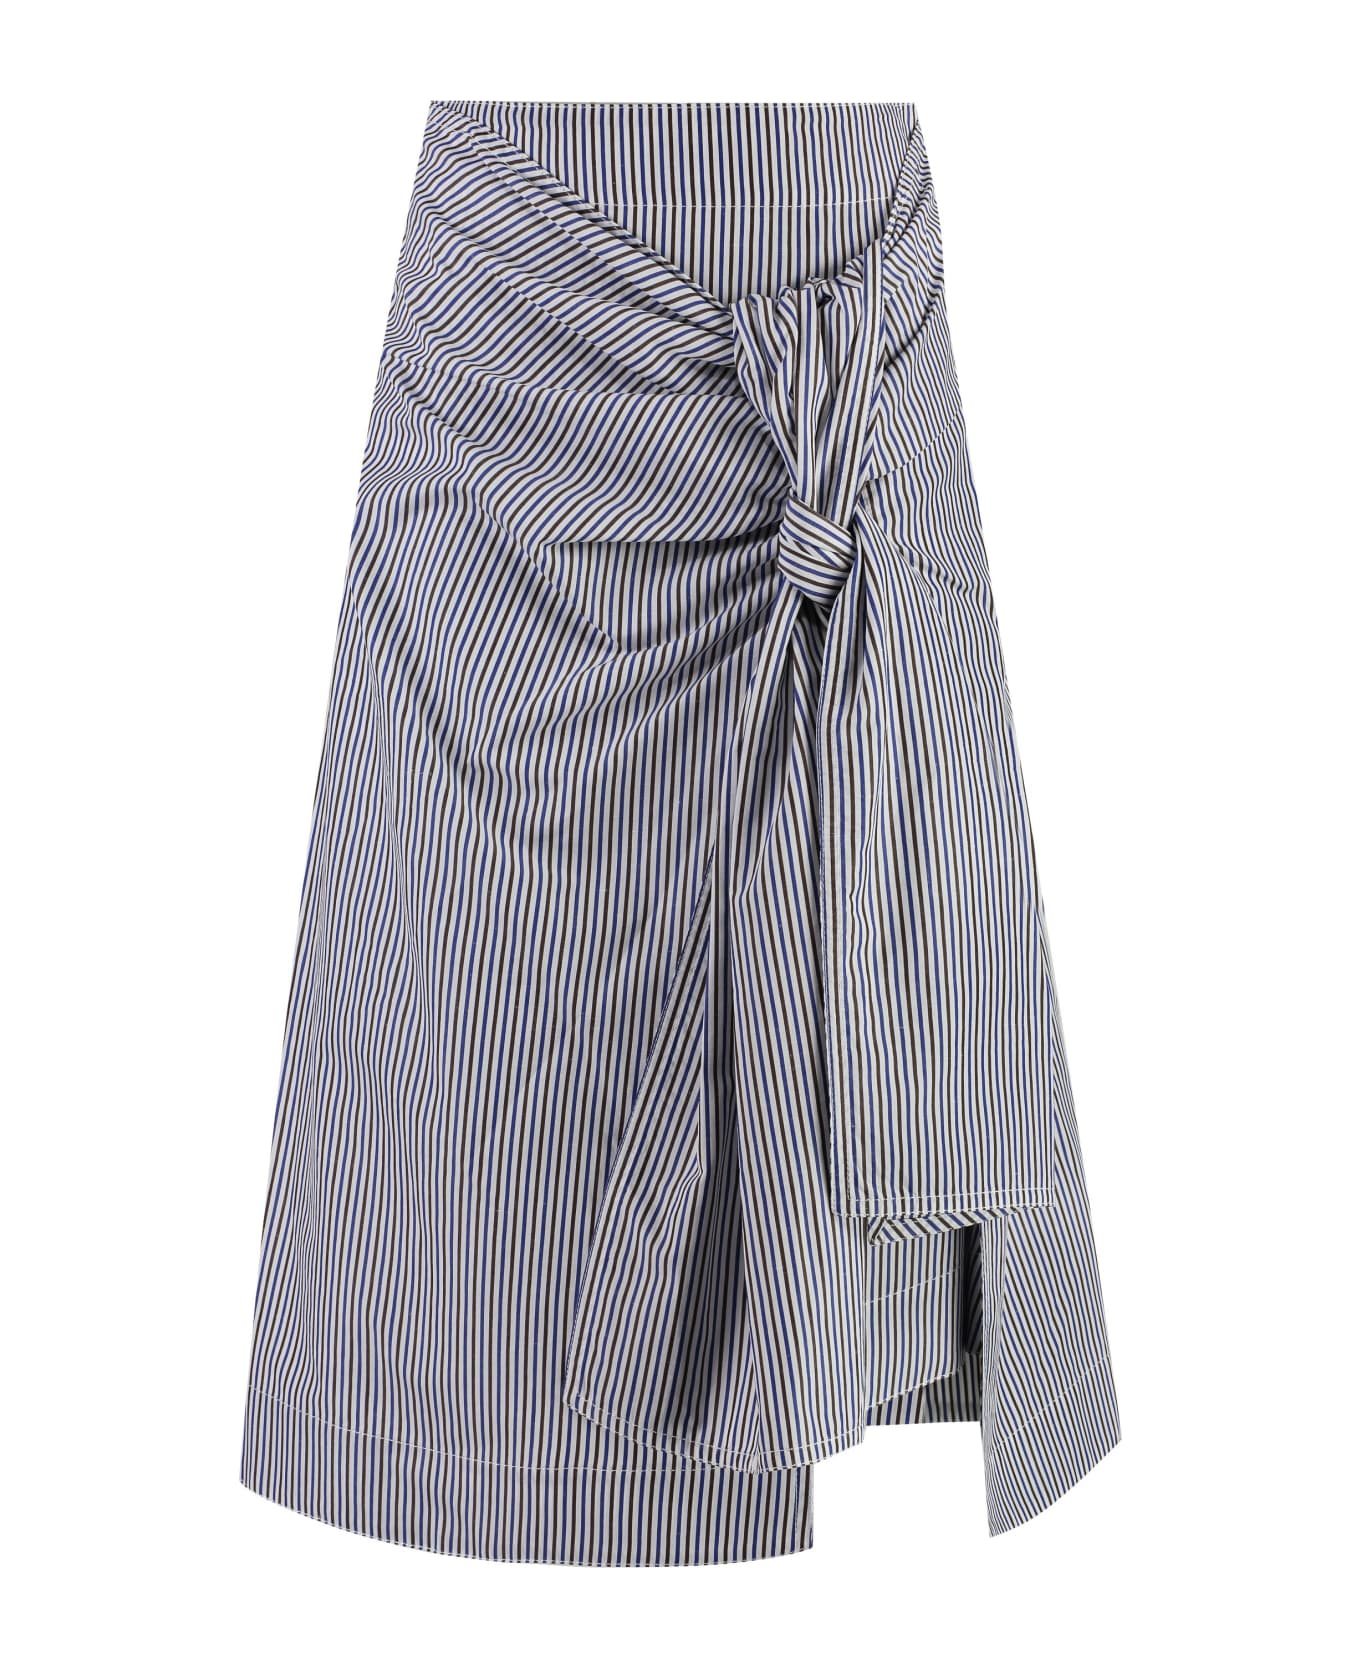 Bottega Veneta Cotton And Linen Skirt - Multicolor